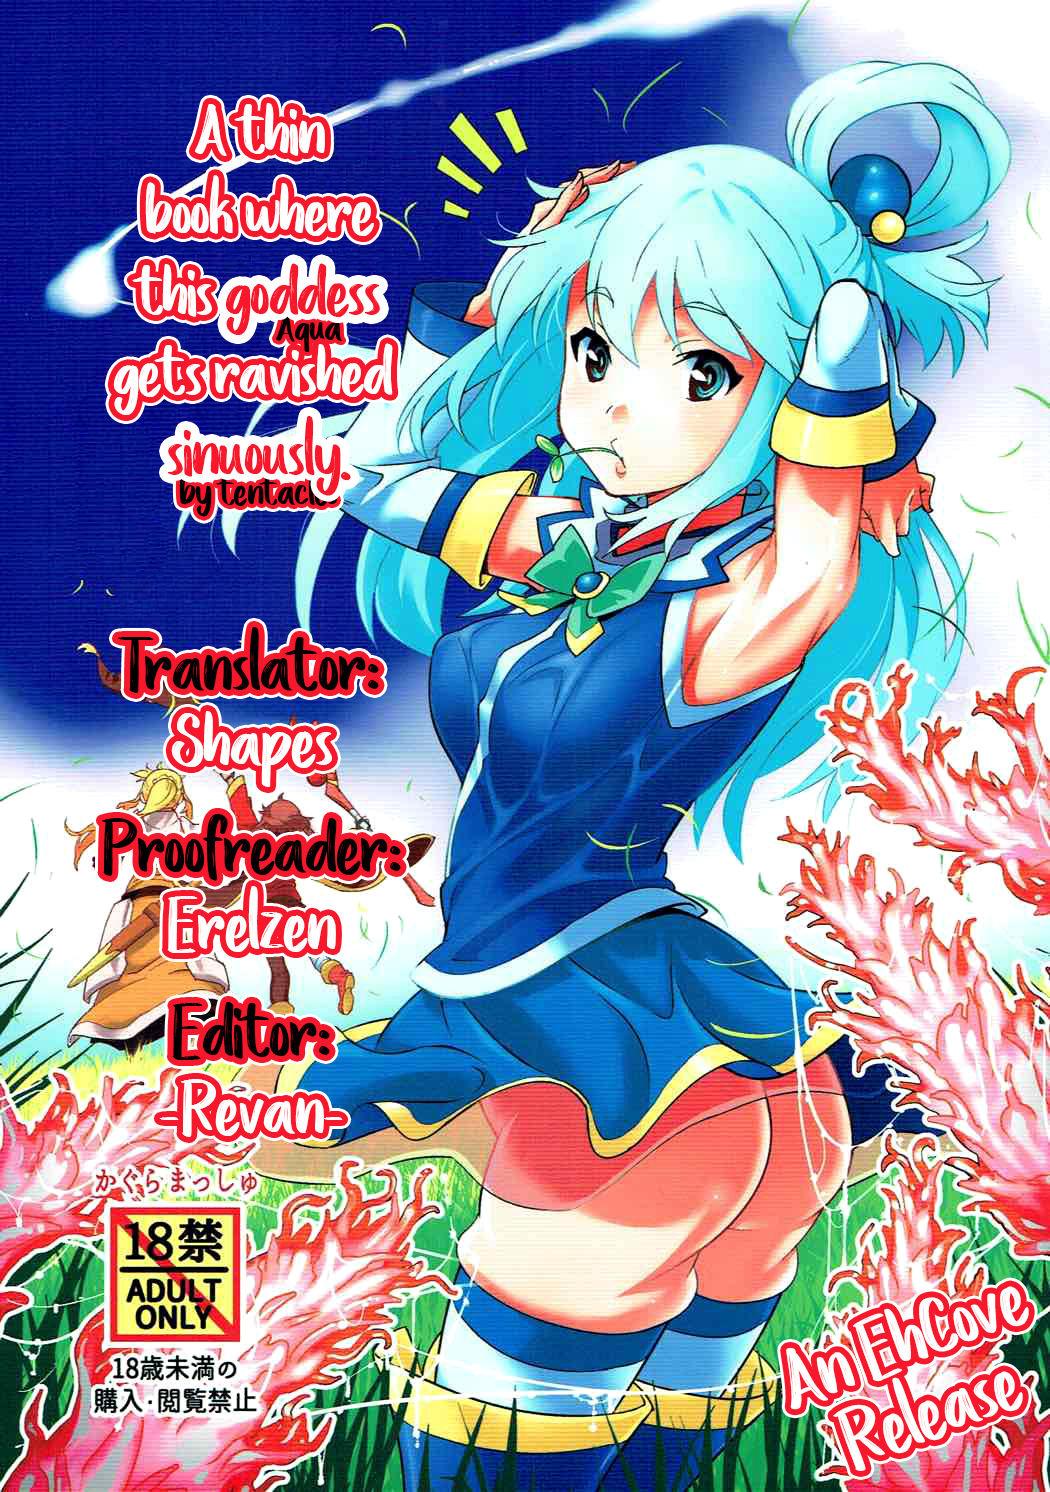 Kono Megami o Uneune Okasu Usui Hon | A thin book where this goddess gets ravished sinuously 26